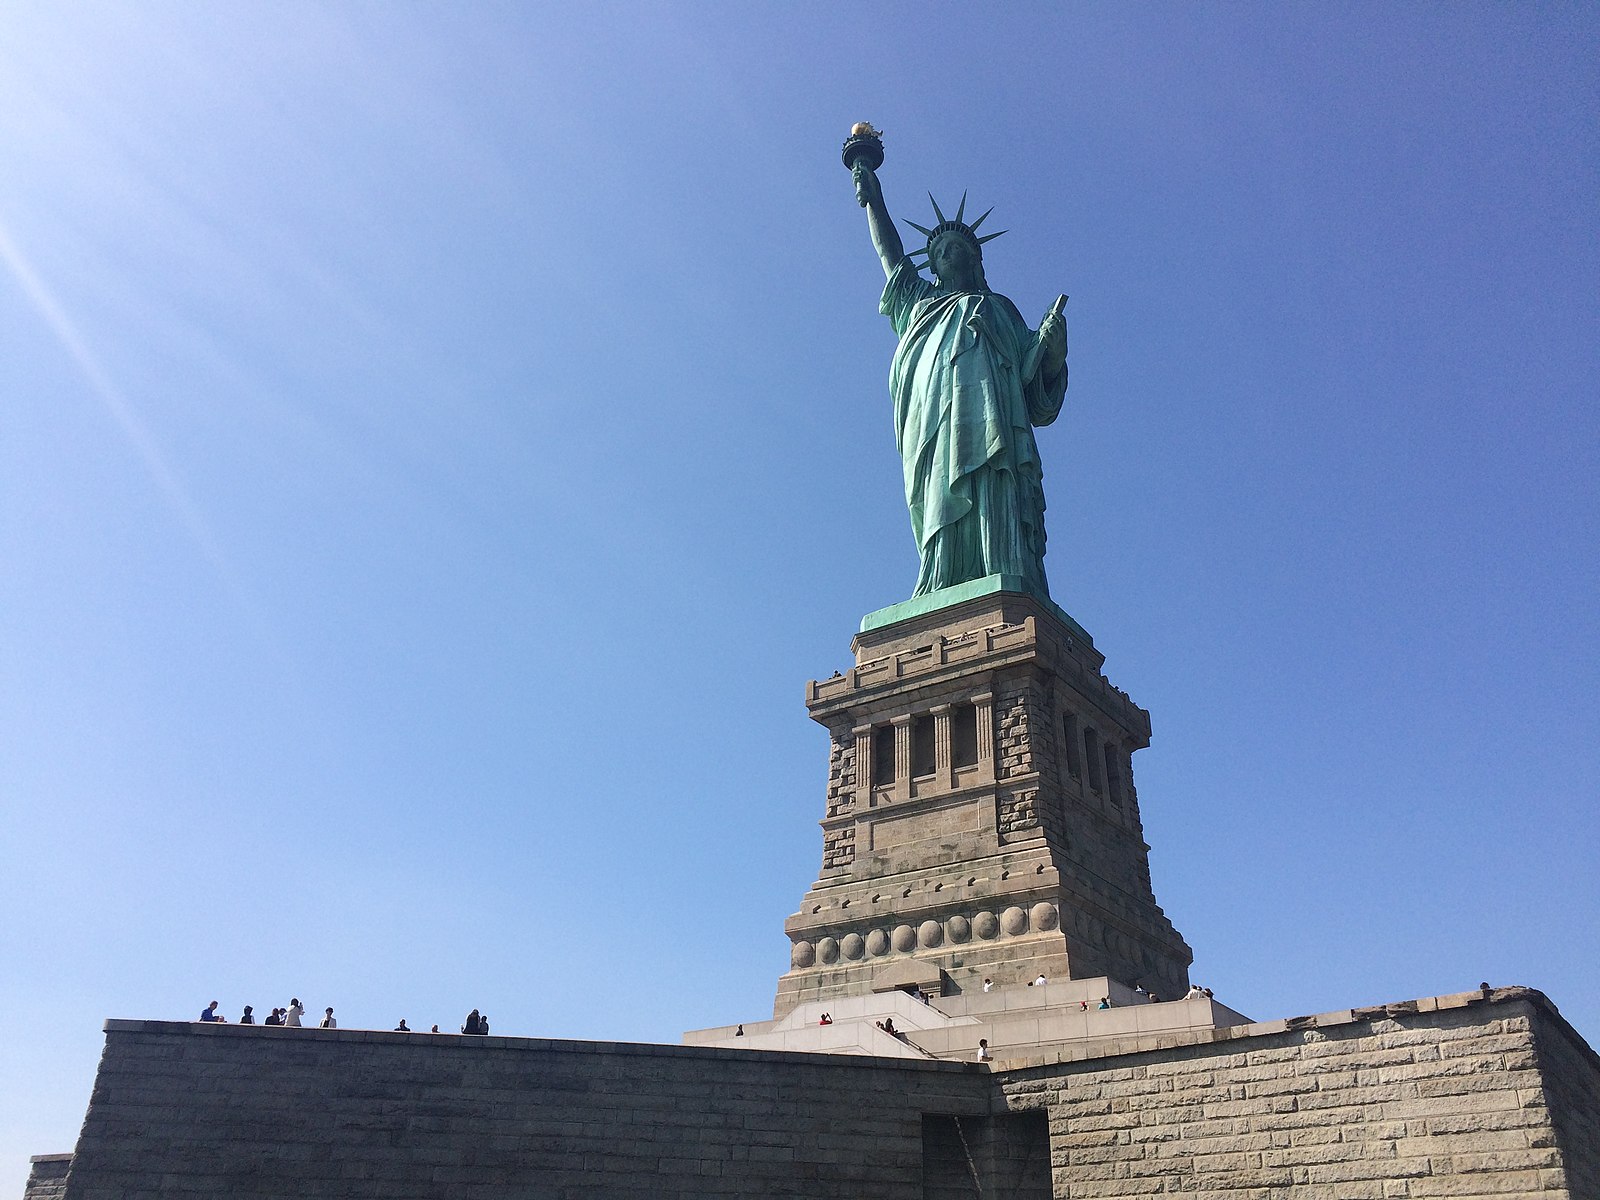 Statue of Liberty pedestal